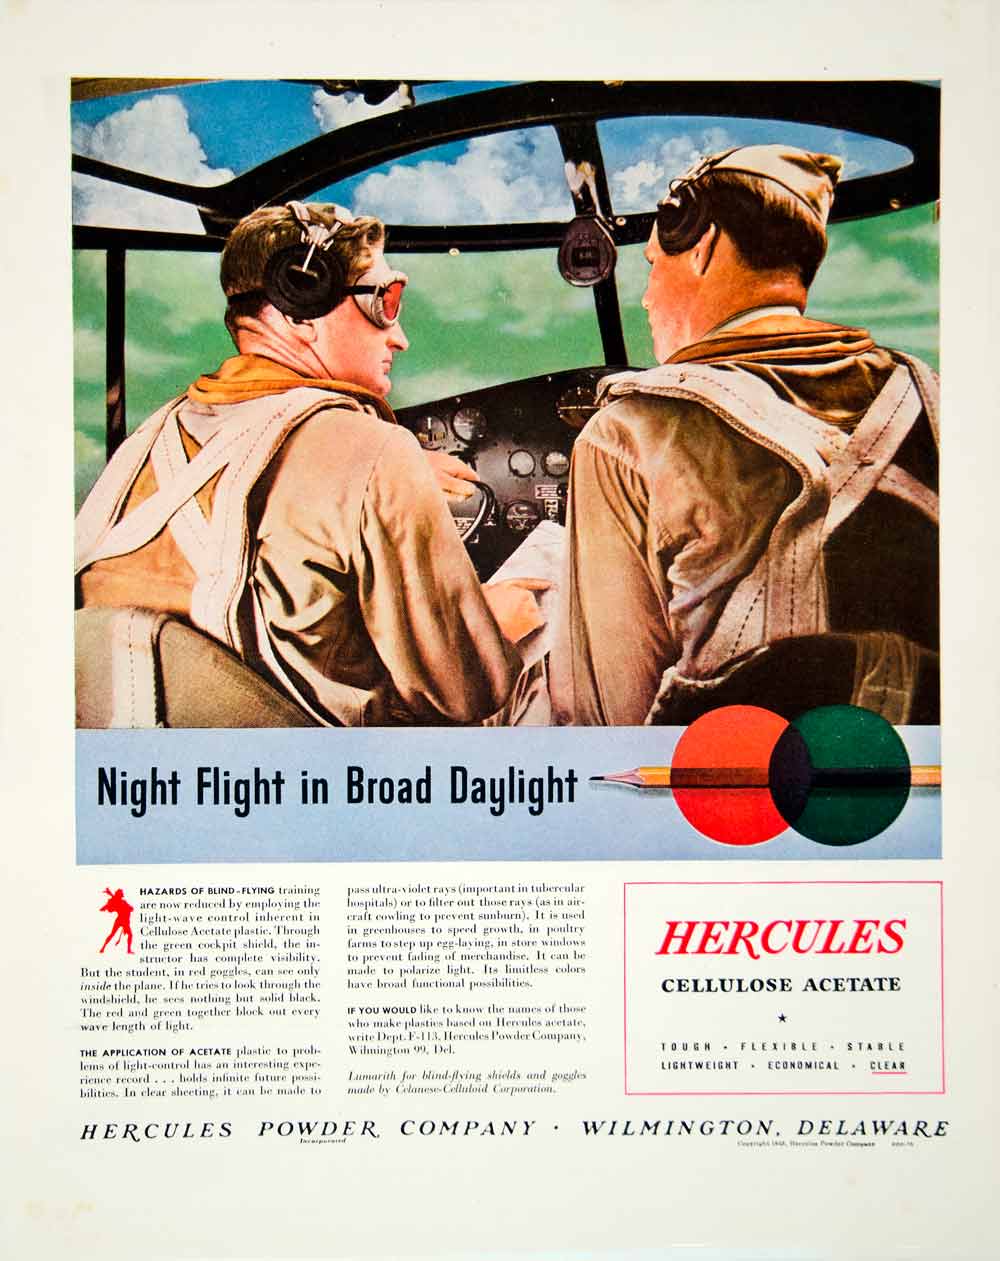 1943 Ad Blind Flying Training Cockpit World War II Cellulose Acetate FTM4